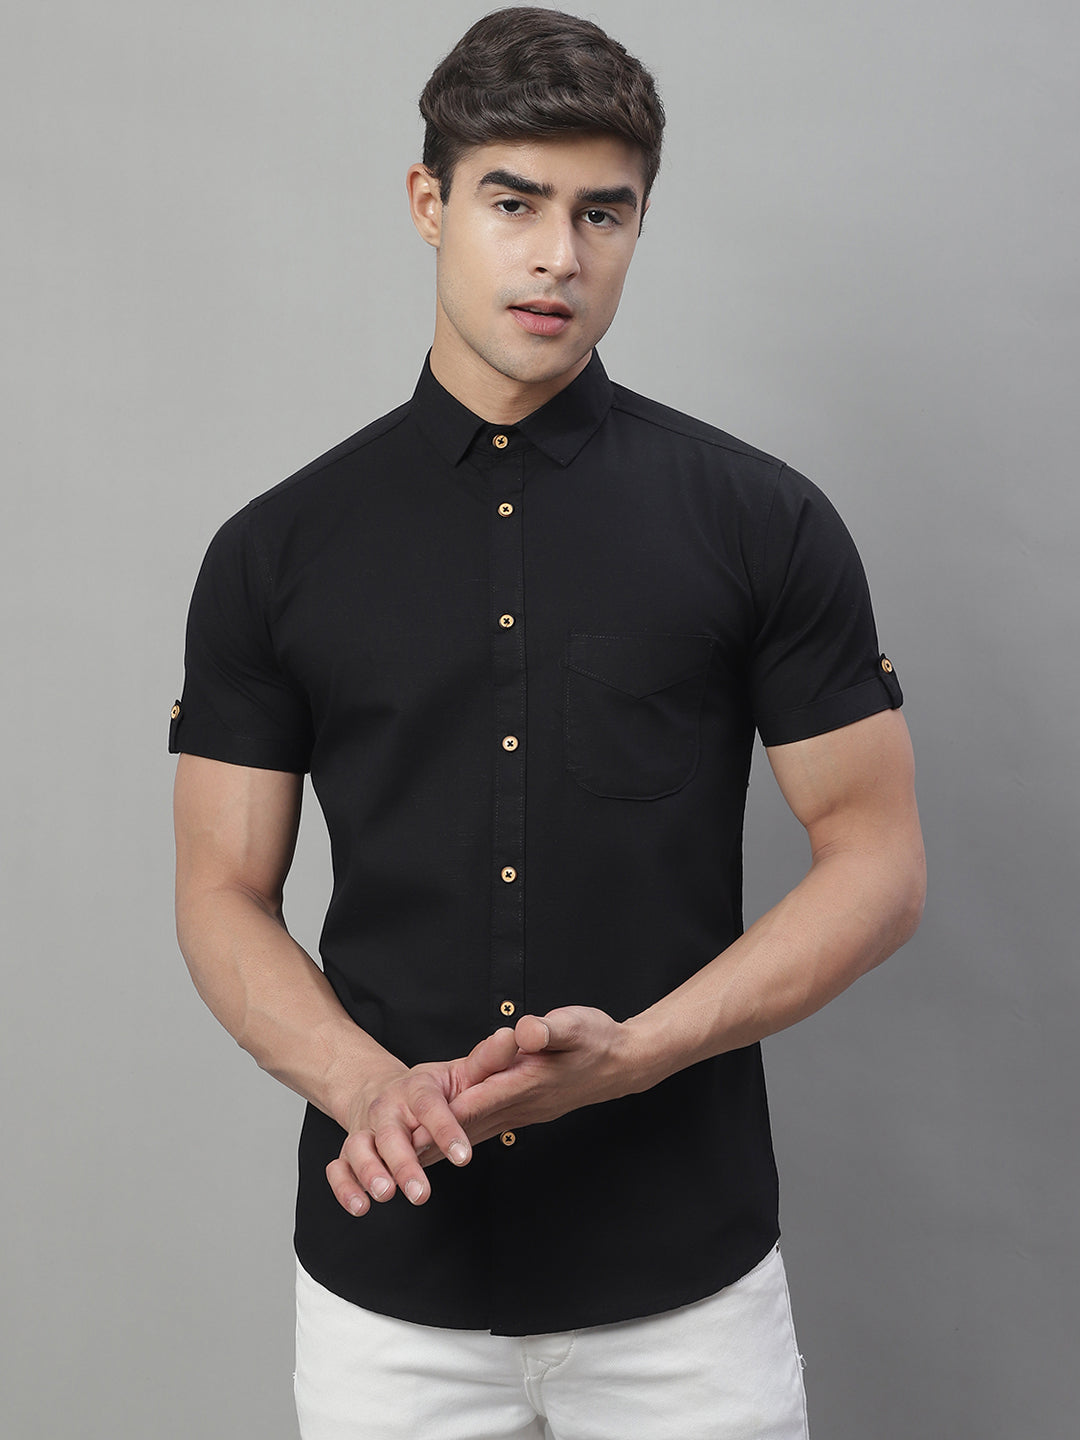 Kicky Pure Cotton Half sleeves Solid Shirt - Black